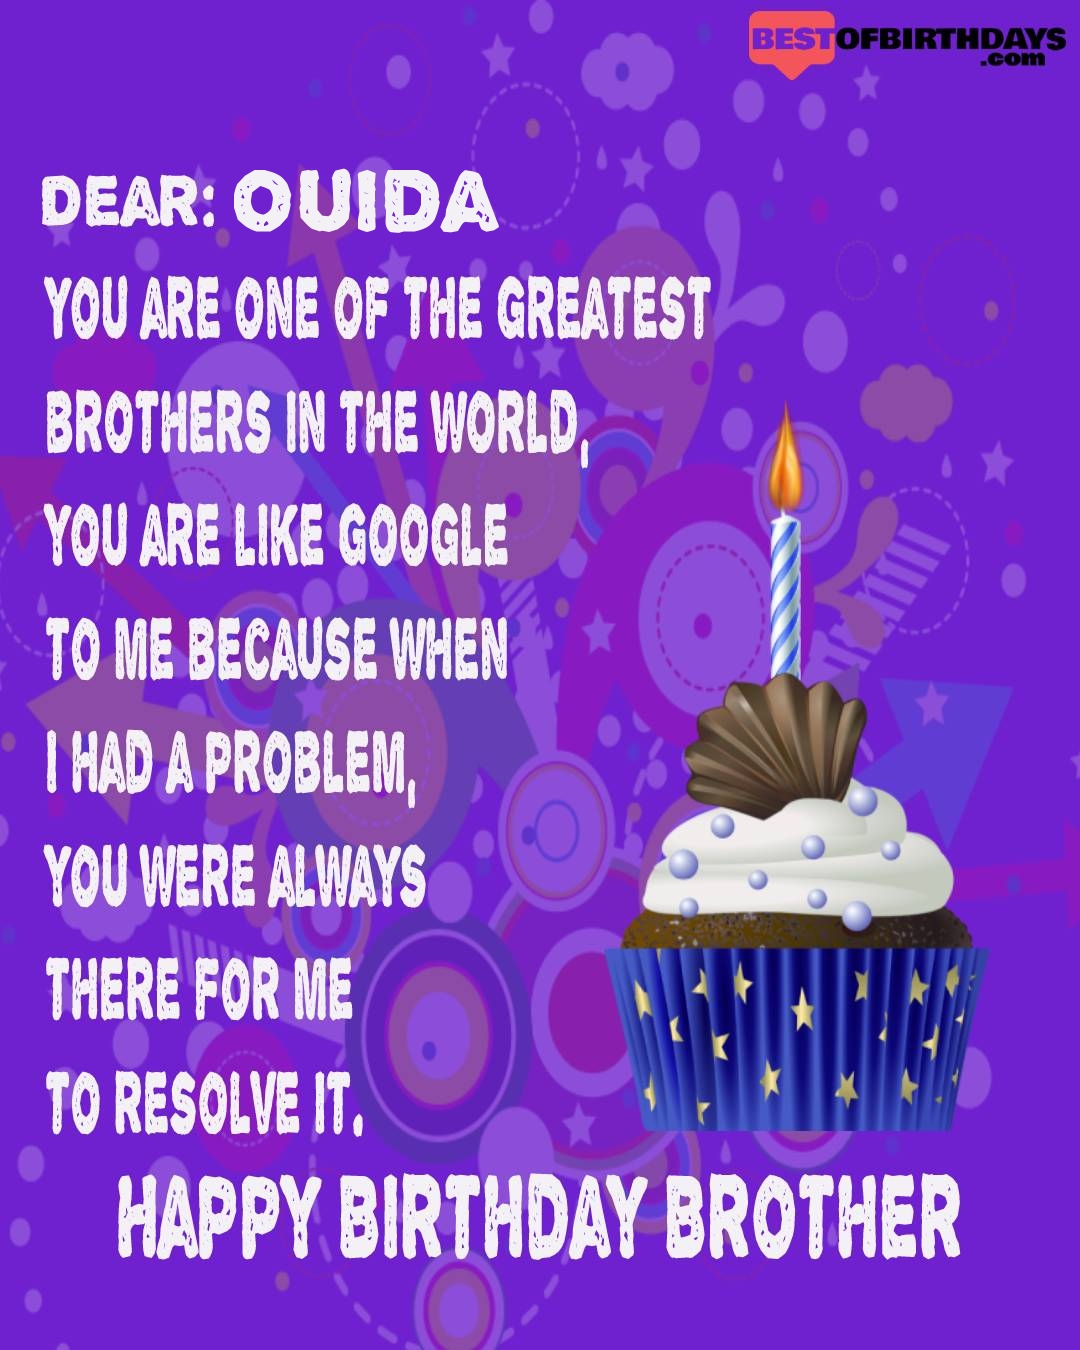 Happy birthday ouida bhai brother bro